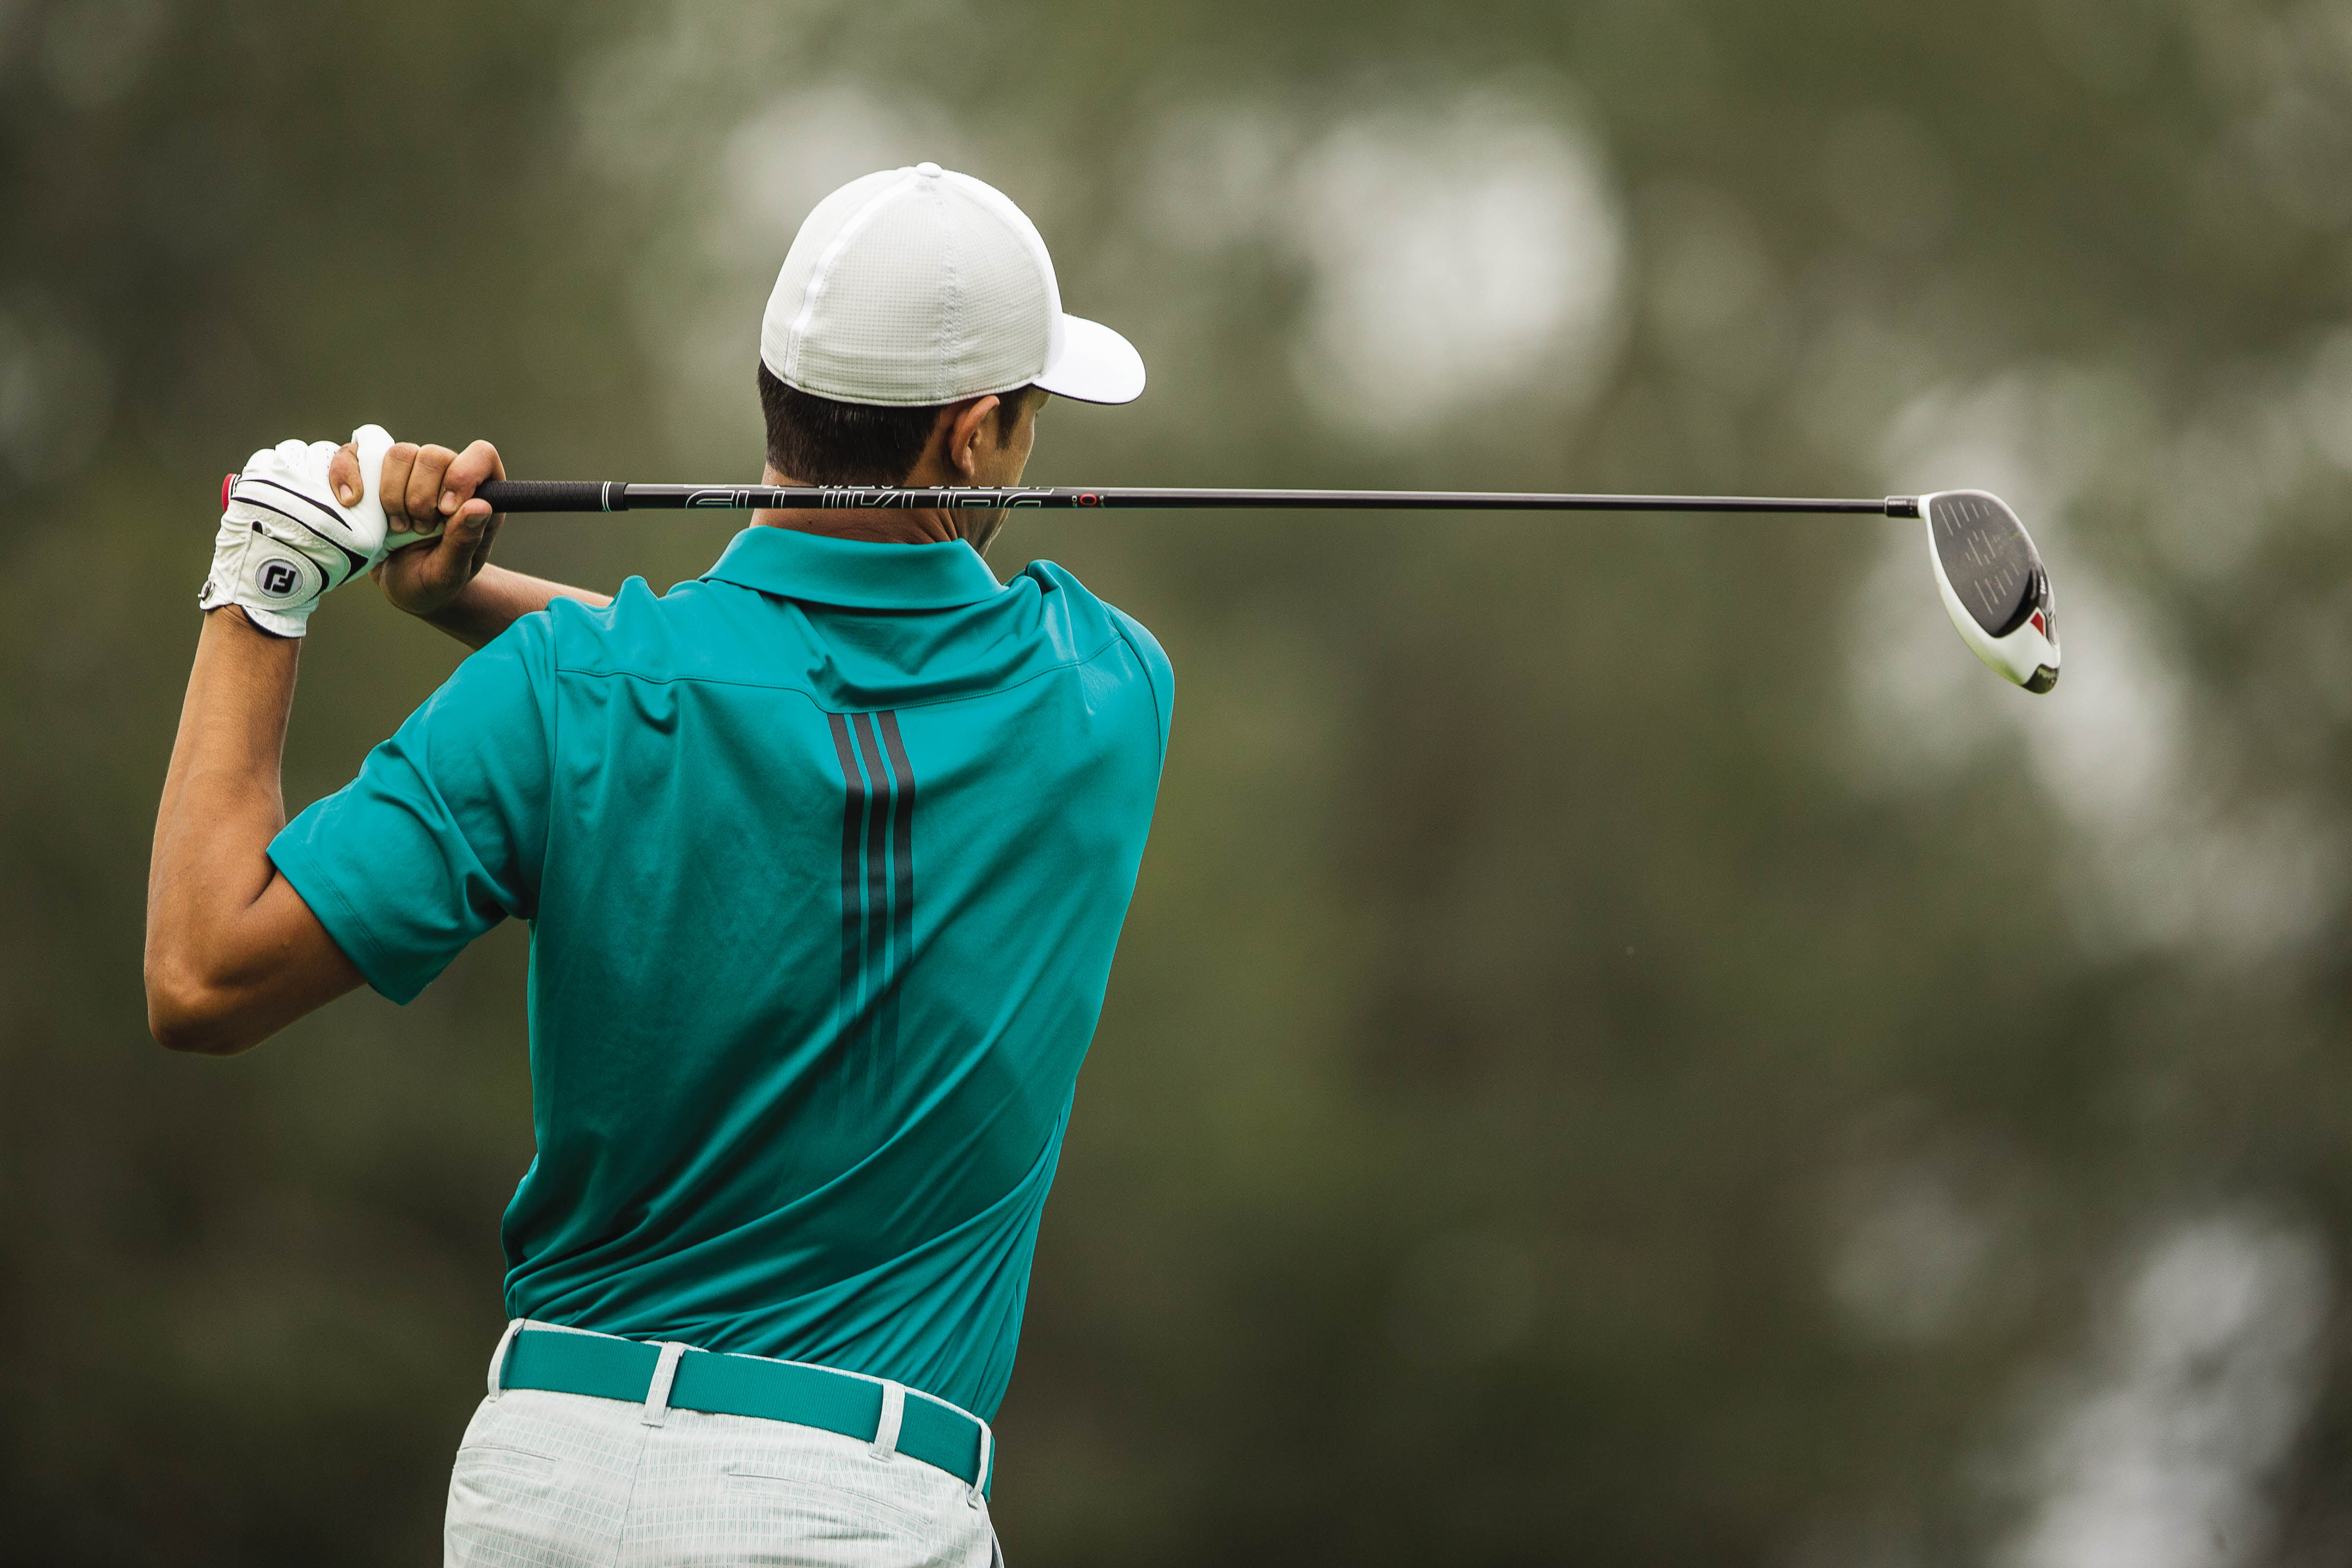 How to Buy Fairway Woods, dicks sporting goods pro tips golf